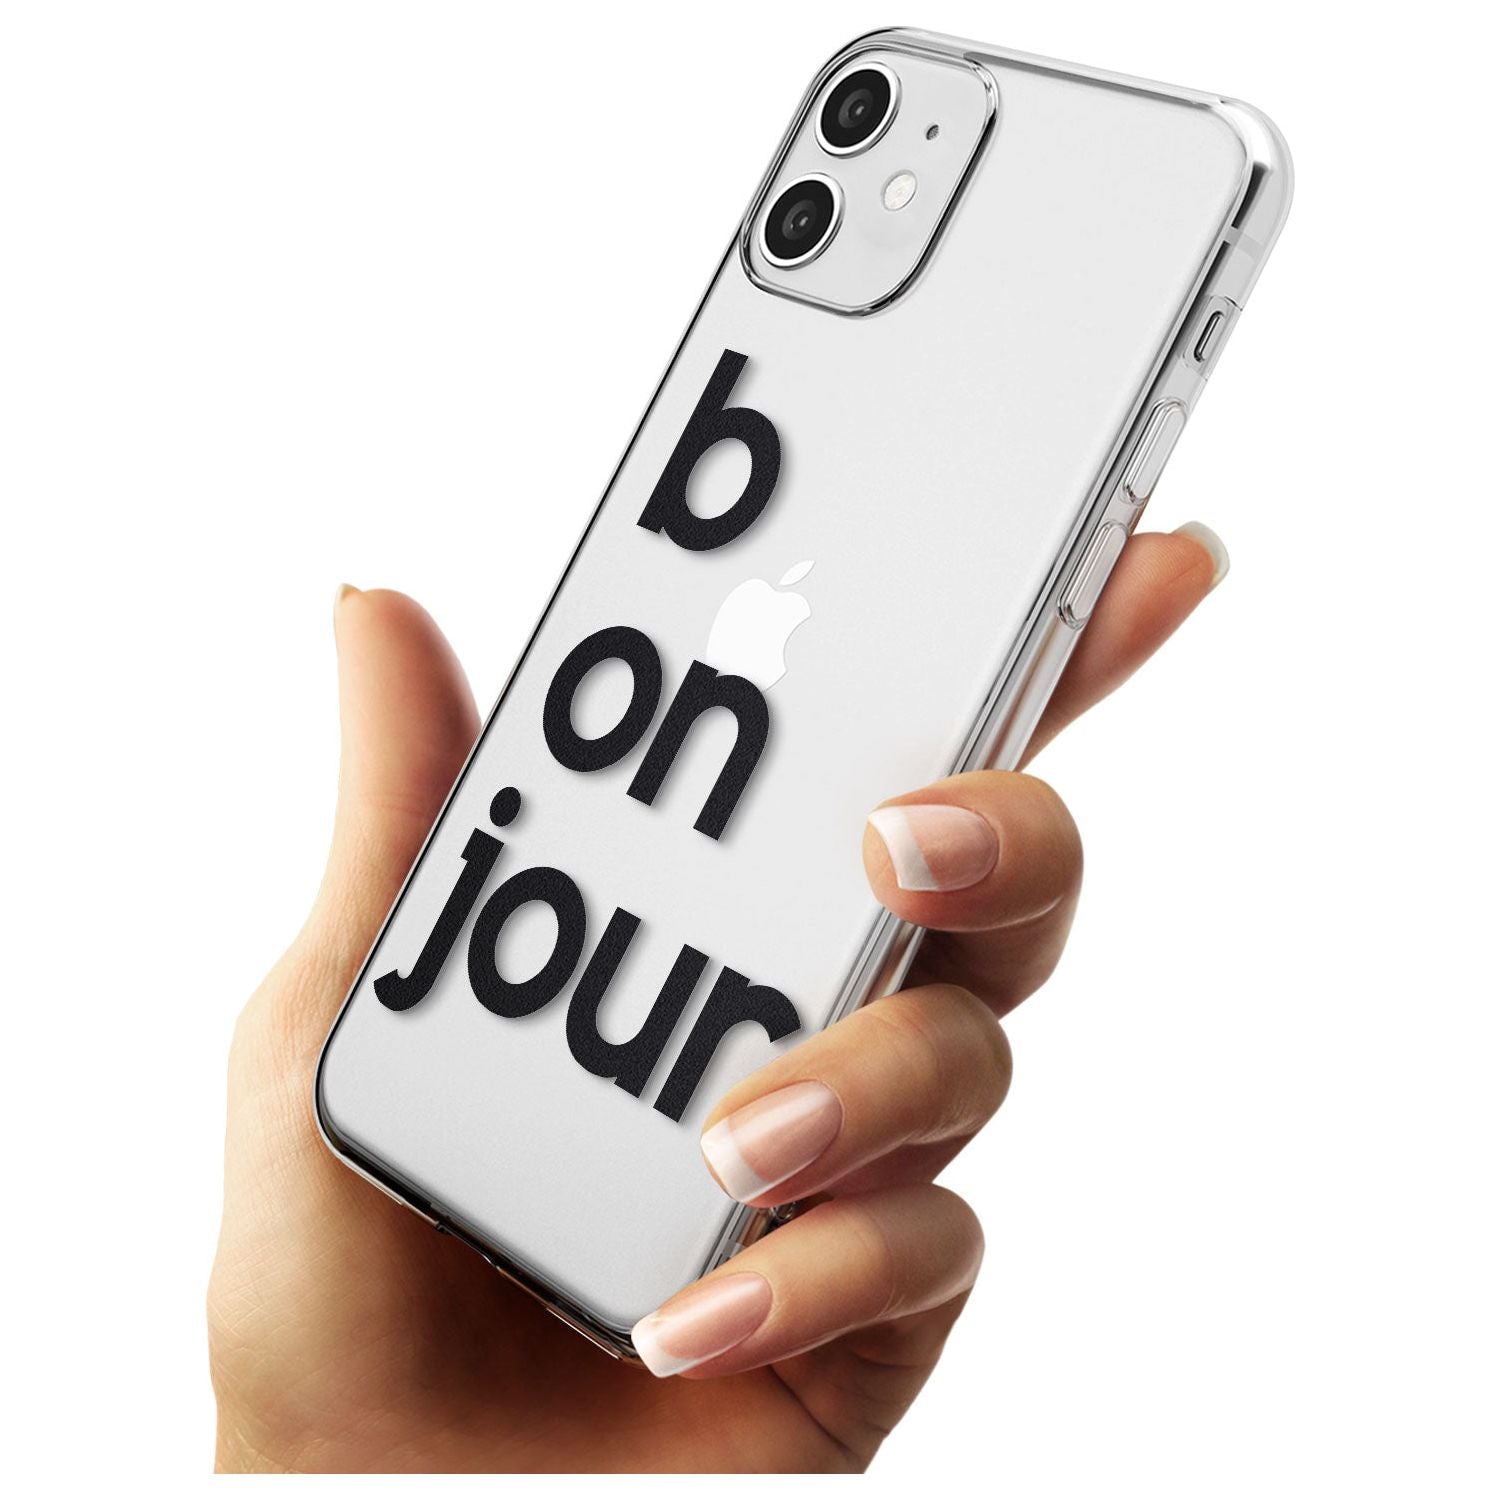 Bonjour Black Impact Phone Case for iPhone 11